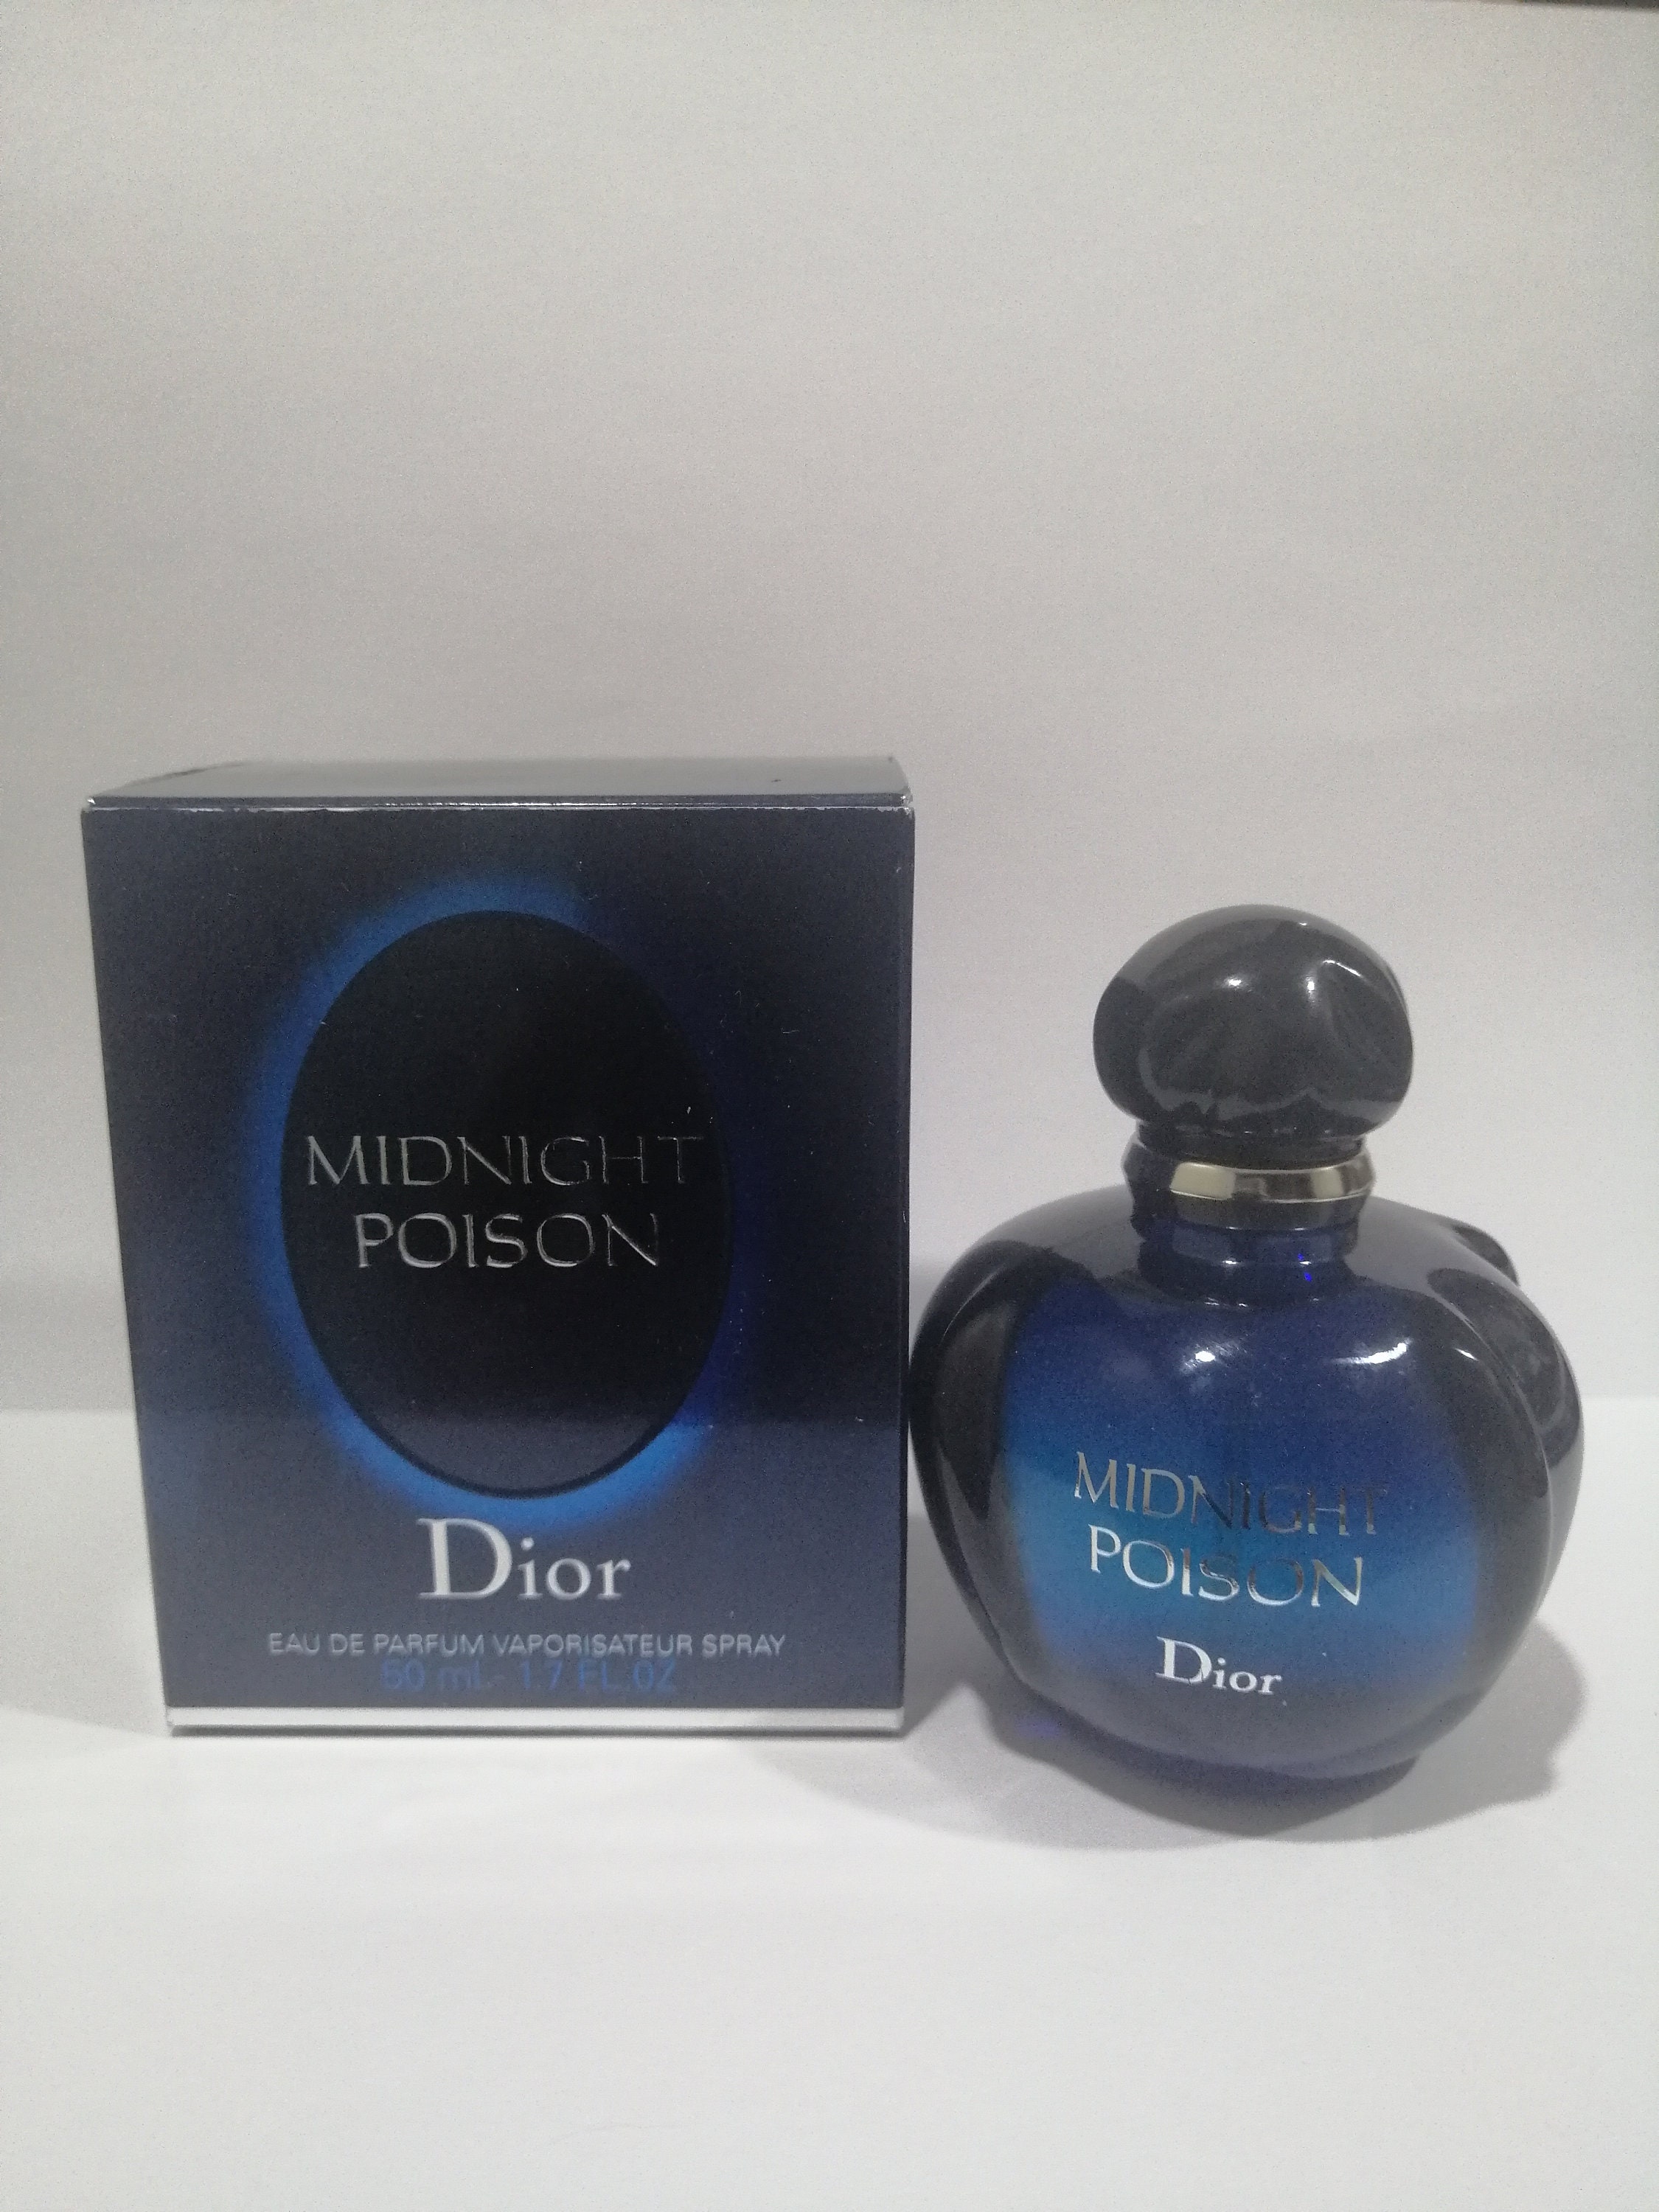 Midnight Poison parfum by Dior 50ml France | Etsy